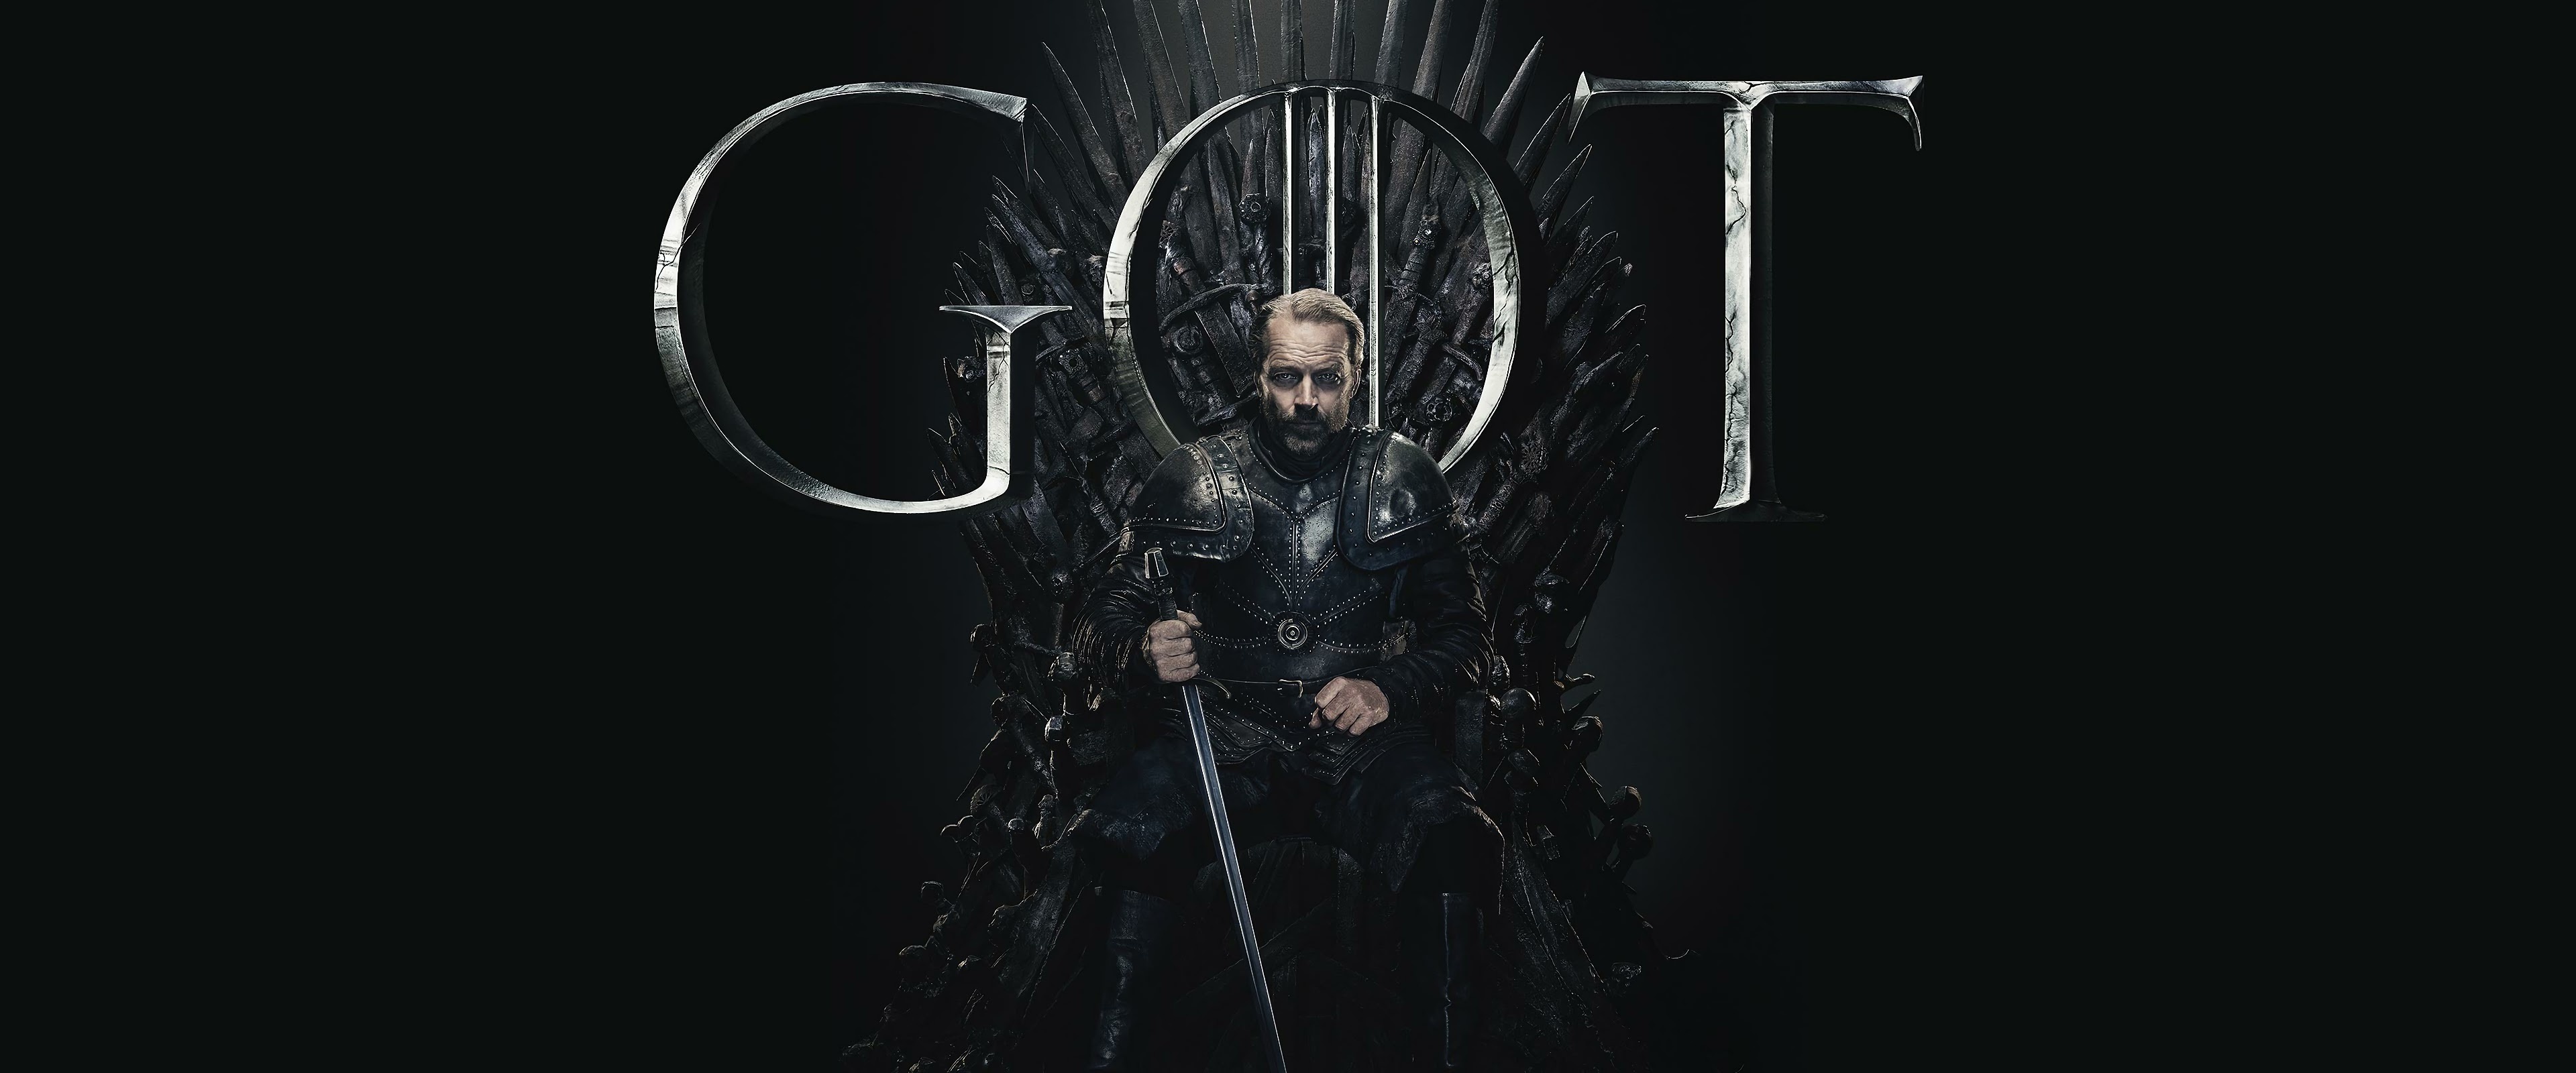 Ser Jorah Mormont, Game of Thrones season, 8 4K wallpaper, Epic scene, 3840x1600 Dual Screen Desktop